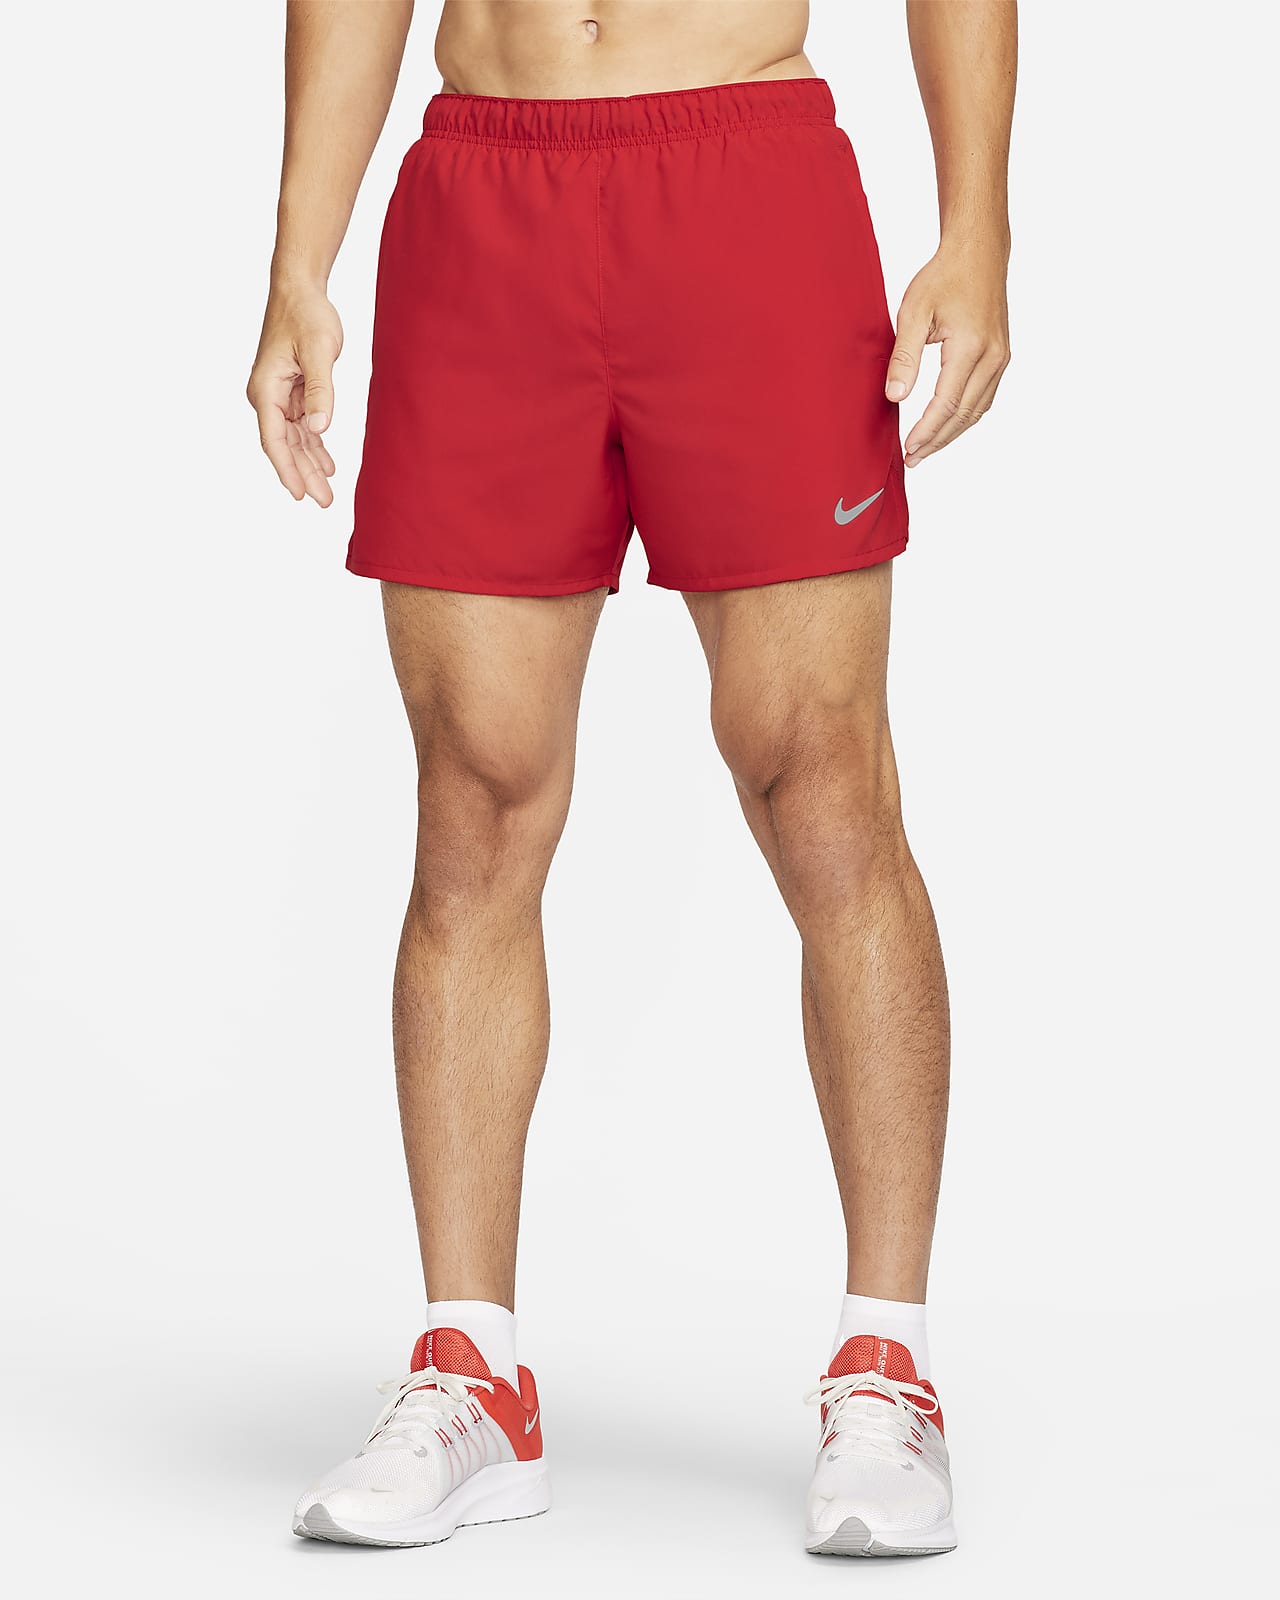 Shorts de running con forro de ropa interior Dri-FIT de 13 cm para hombre Nike Challenger